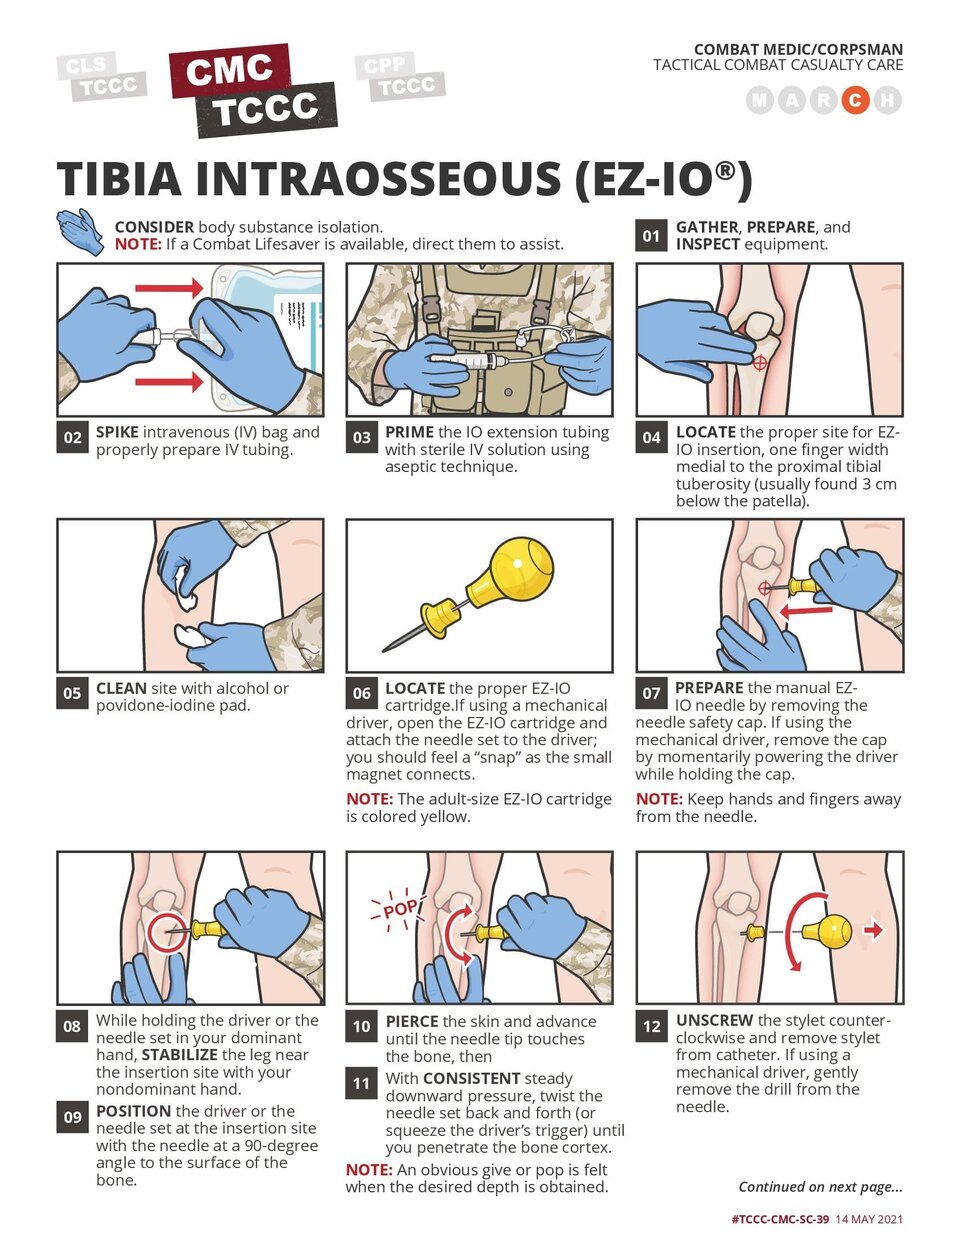 EZ-IO Tibial Intraosseous Access